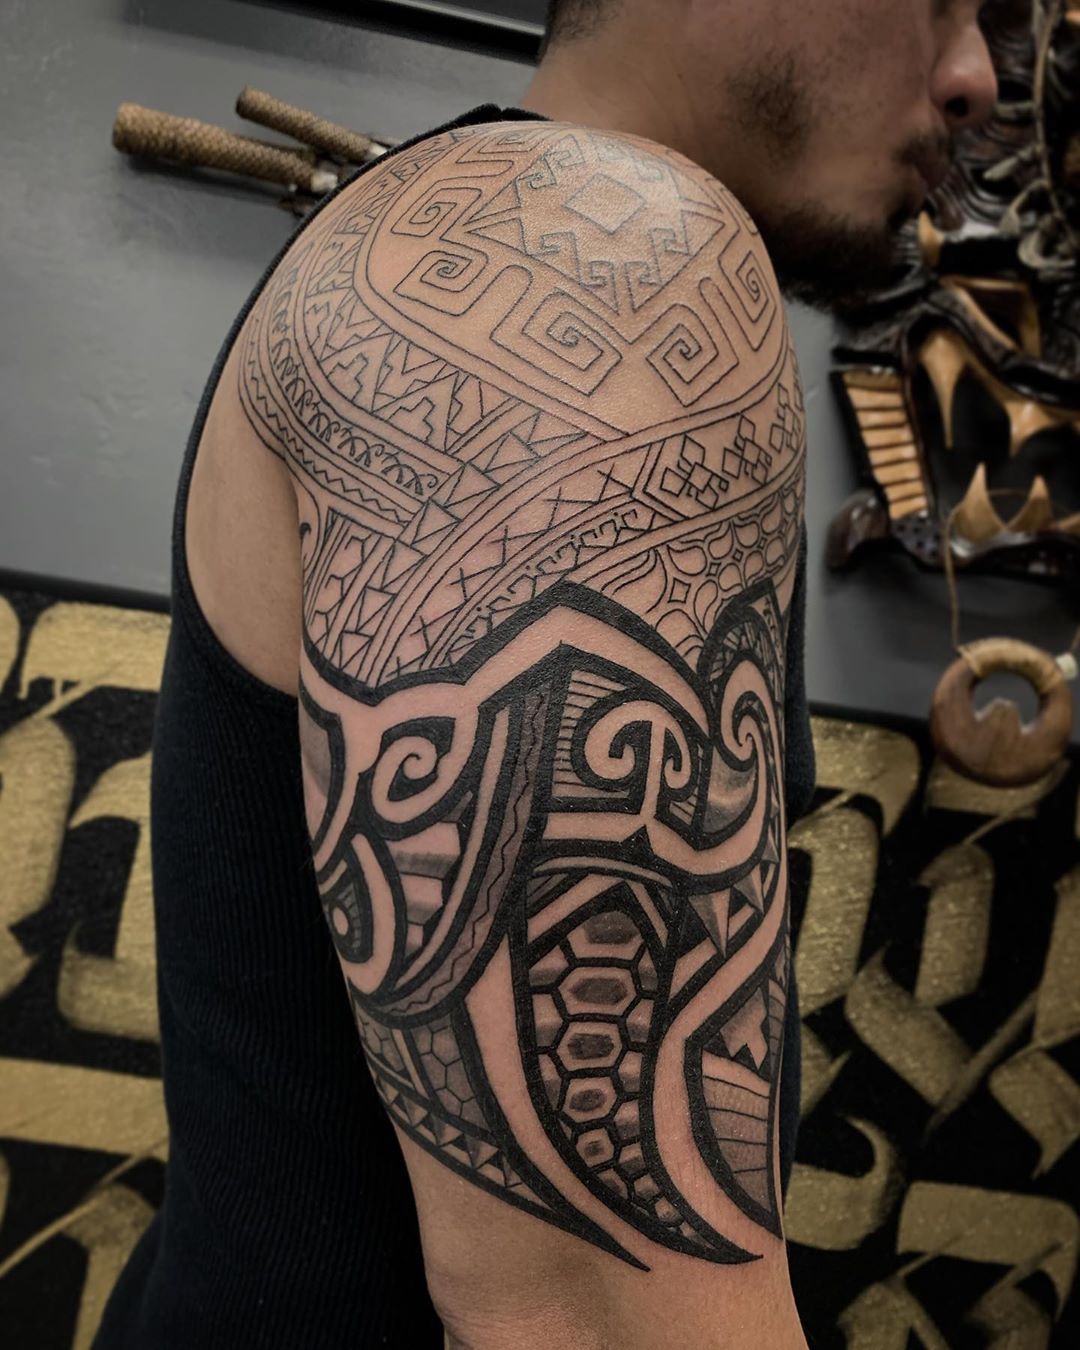 UPDATED] 37 Intricate Filipino Tattoo Designs